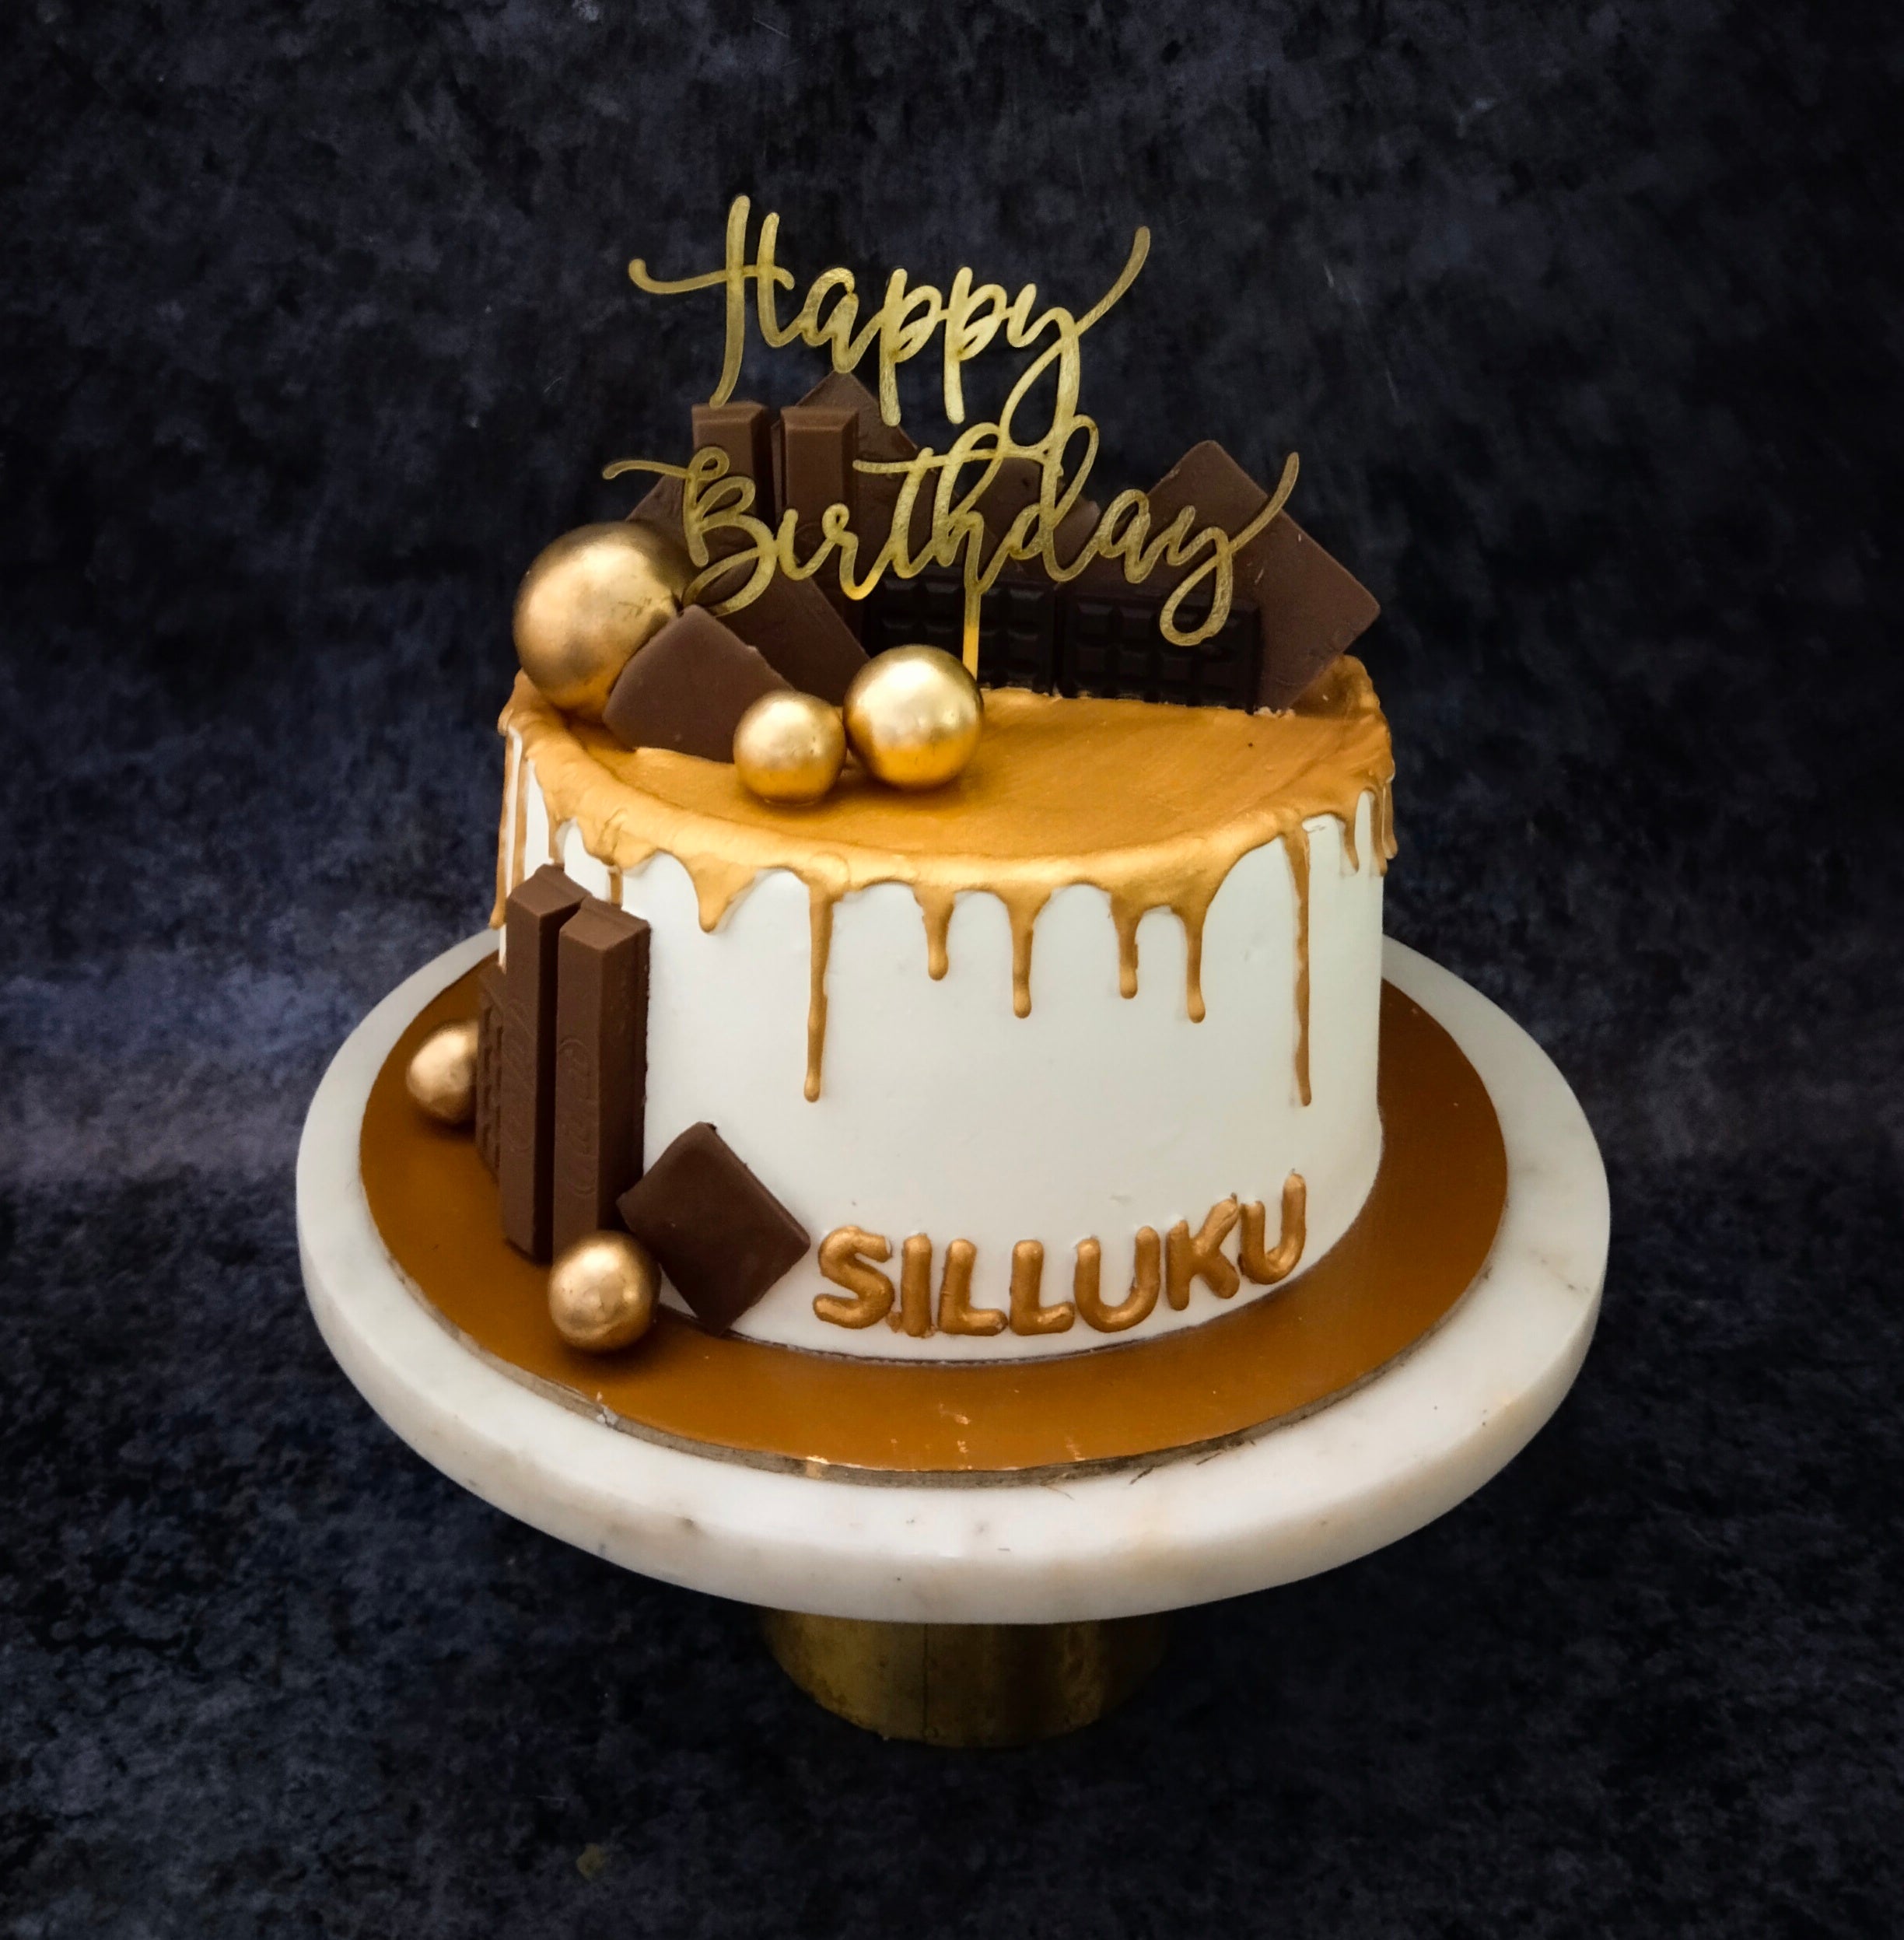 Golden birthday cake | 60th birthday cakes, 50th anniversary cakes, Golden  birthday cakes